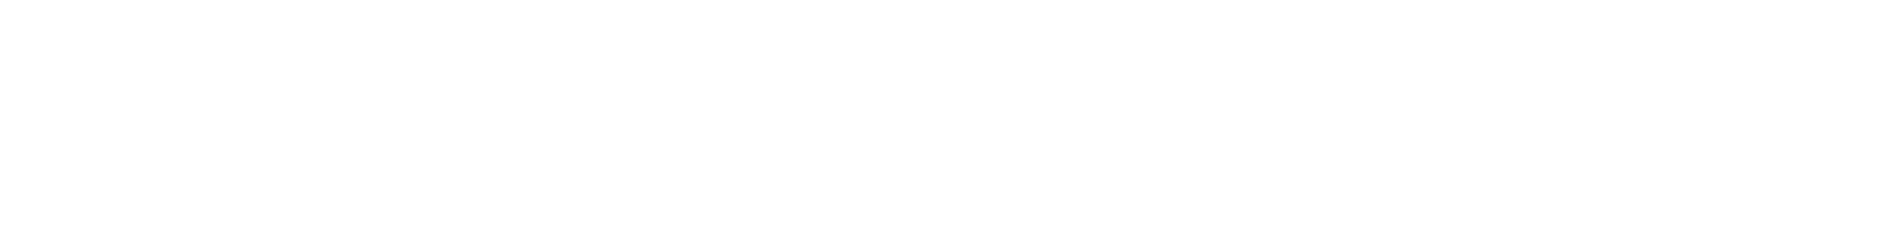 16.03.2024
Sb   20:00
Grande Auditrio